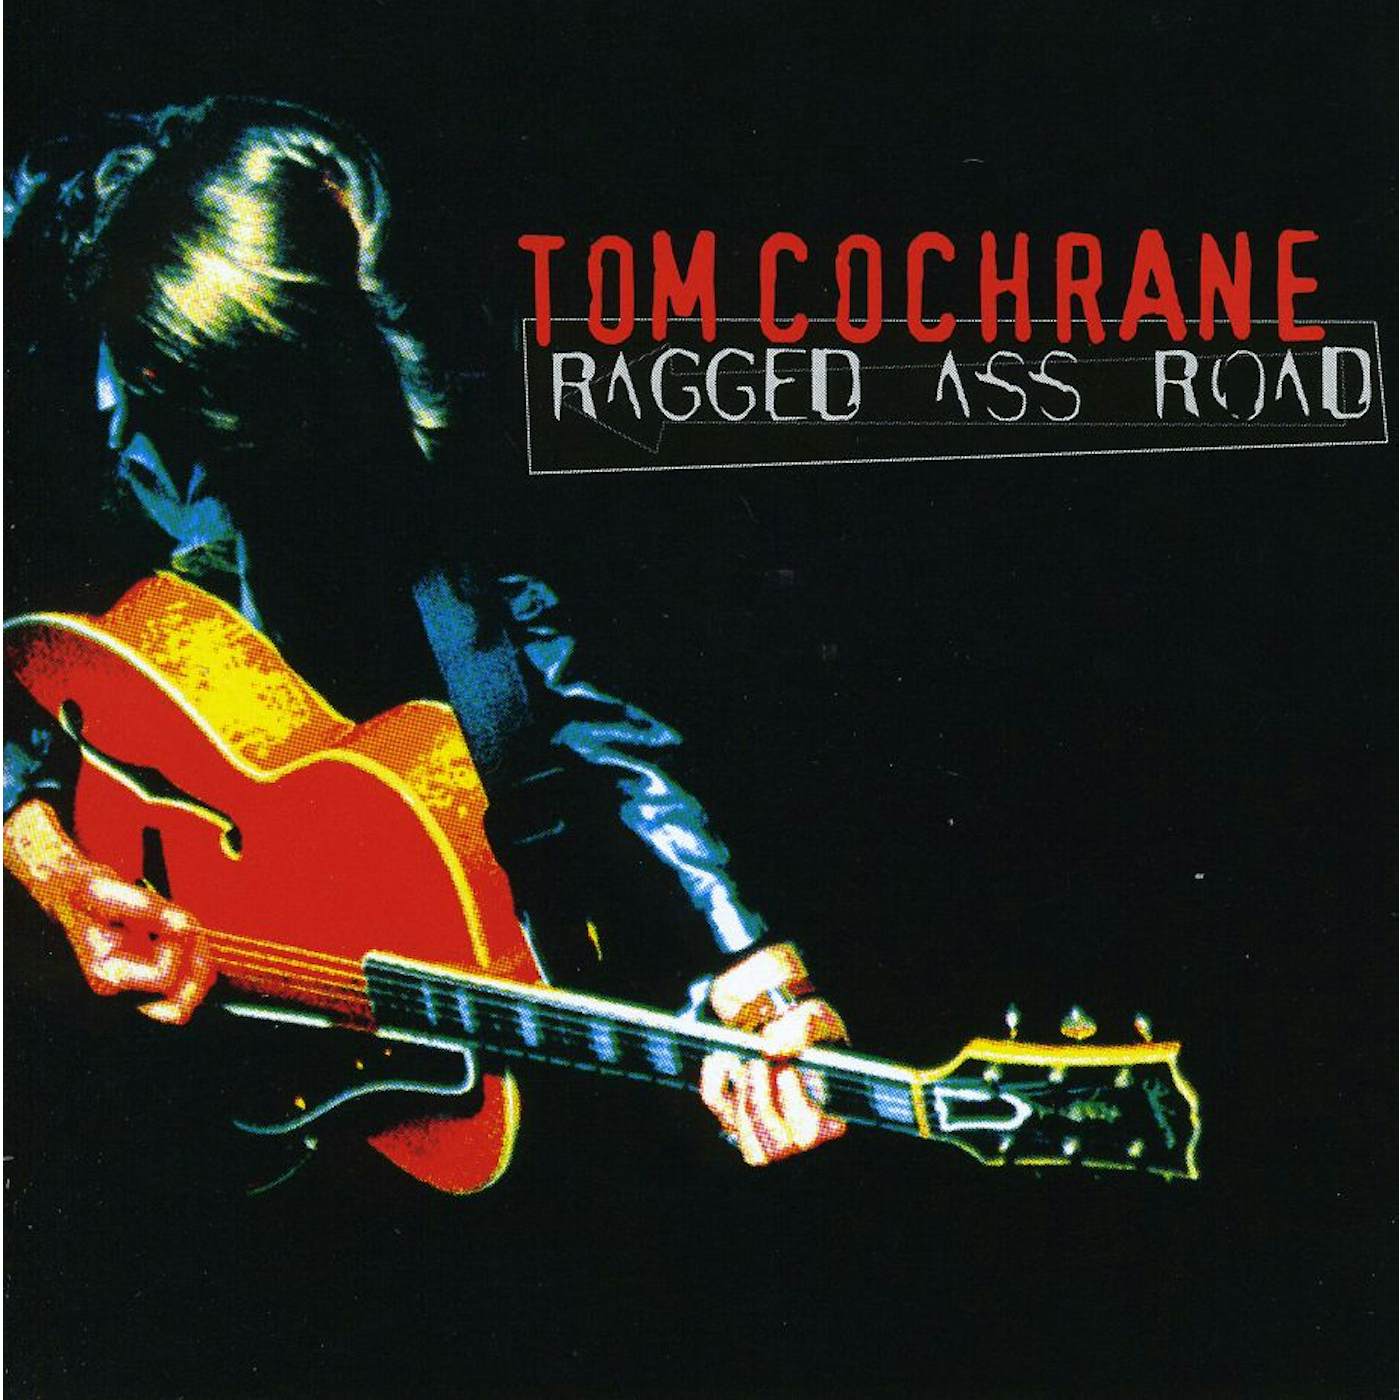 Tom Cochrane RAGGED ASS ROAD CD